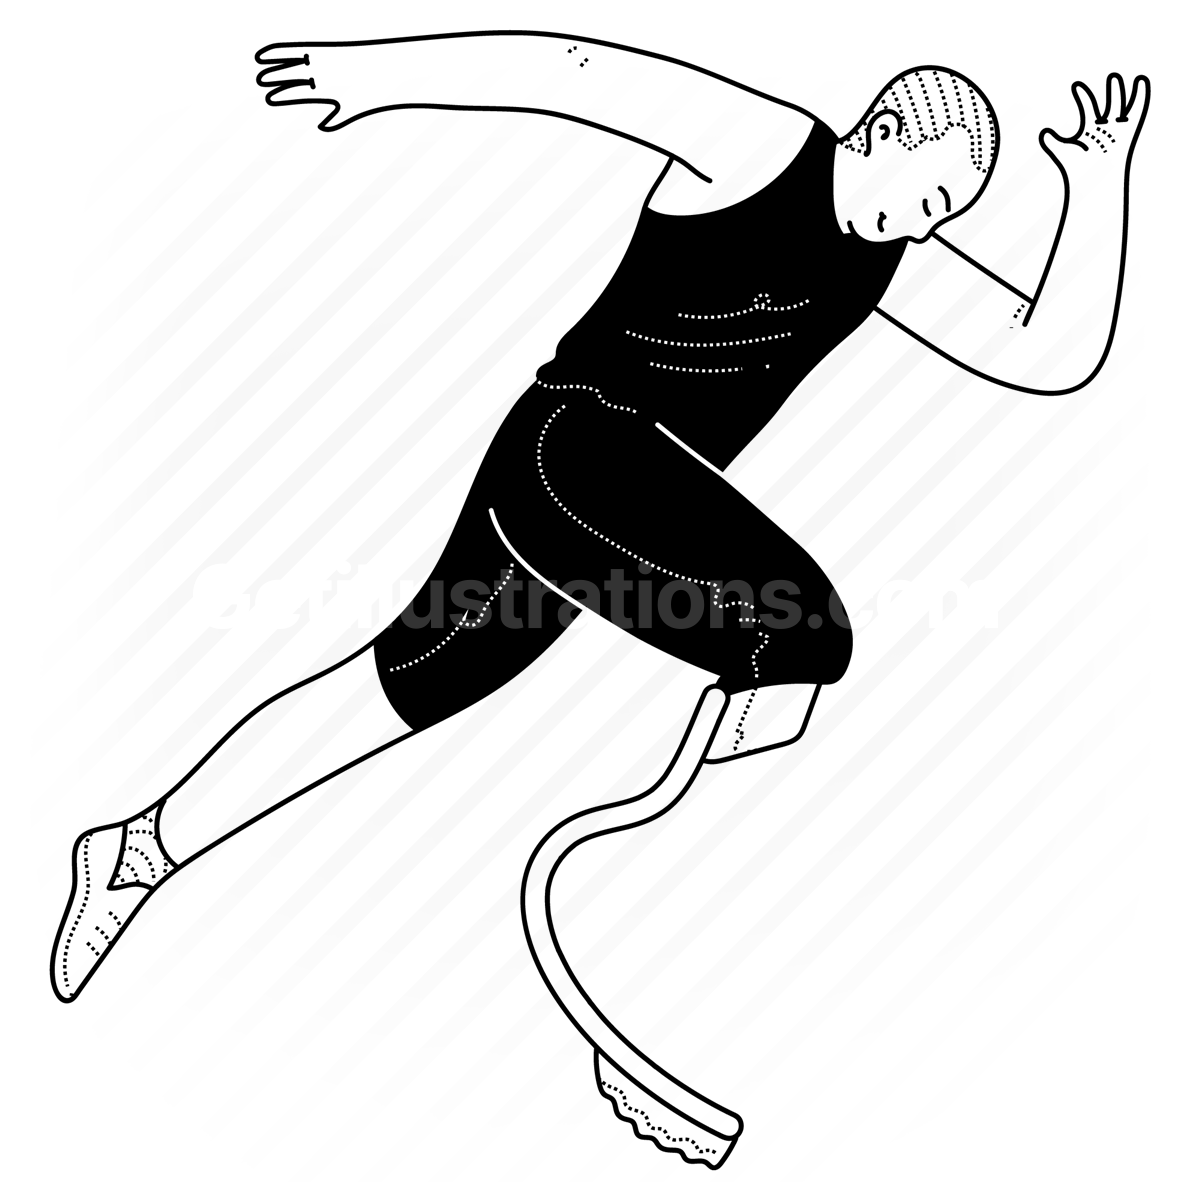 disability, runner, running, paralympics, amputee, injury, one leg